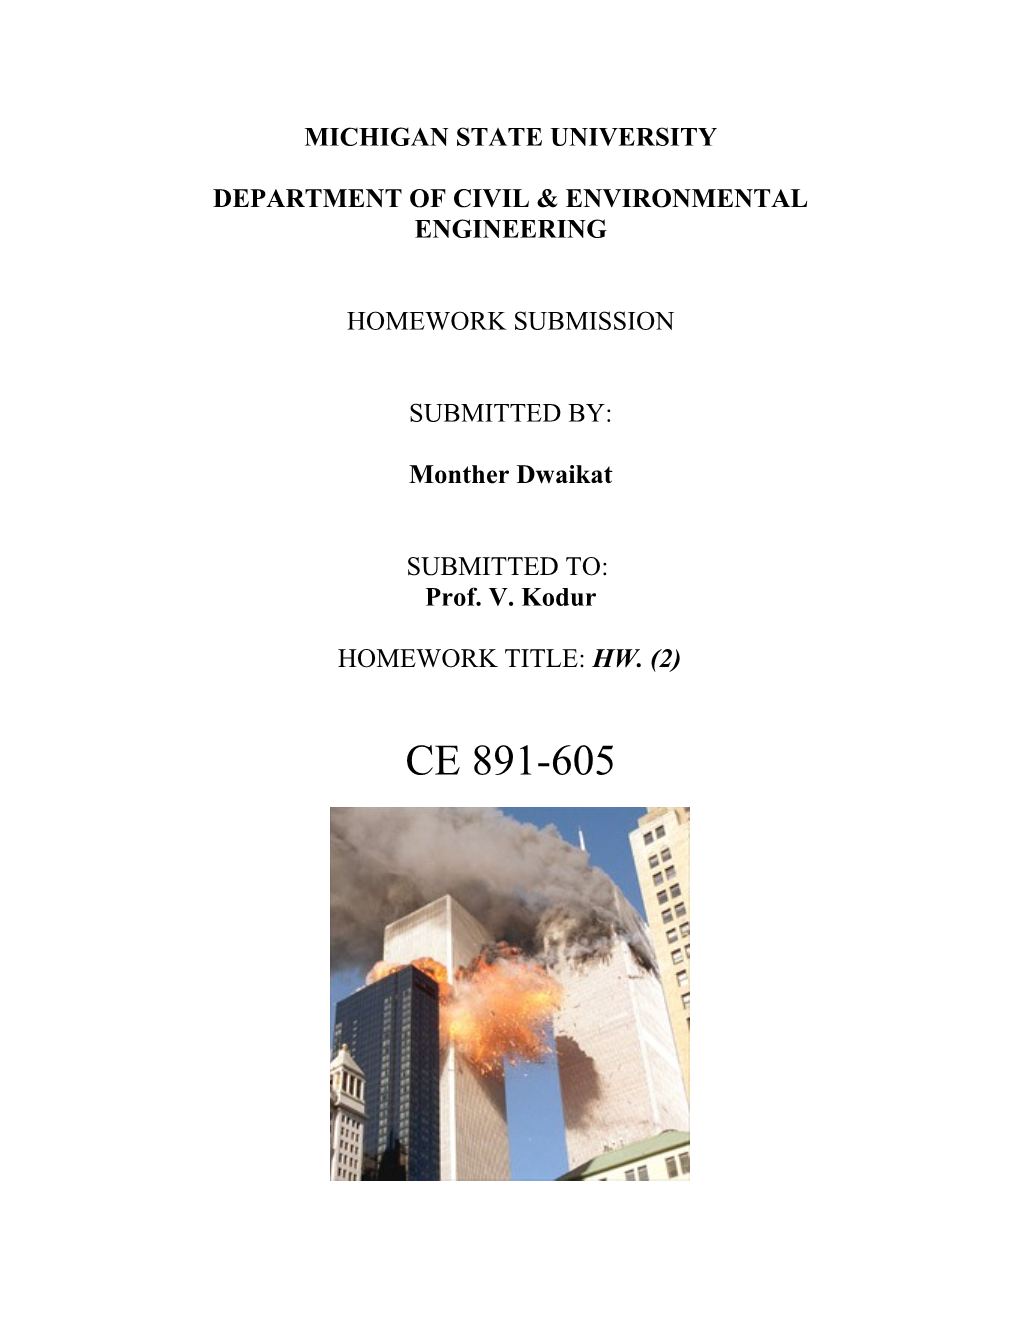 Department of Civil & Environmental Engineering